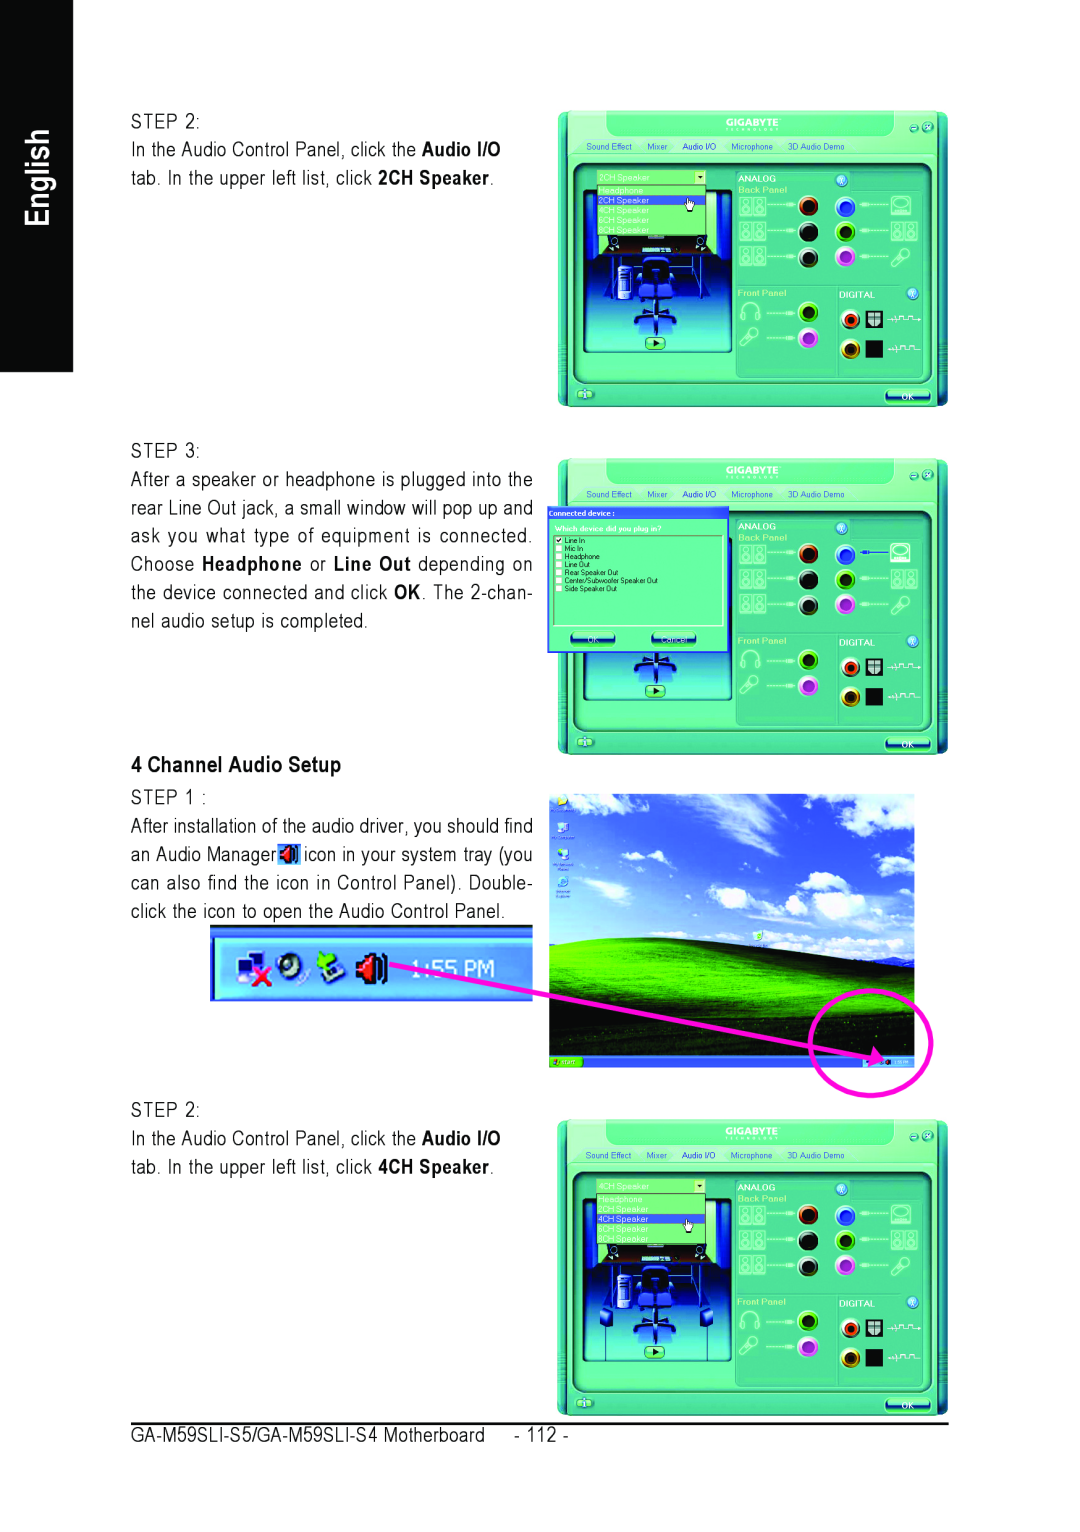 Gigabyte GA-M59SLI-S5, GA-M59SLI-S4 user manual English, Channel Audio Setup 